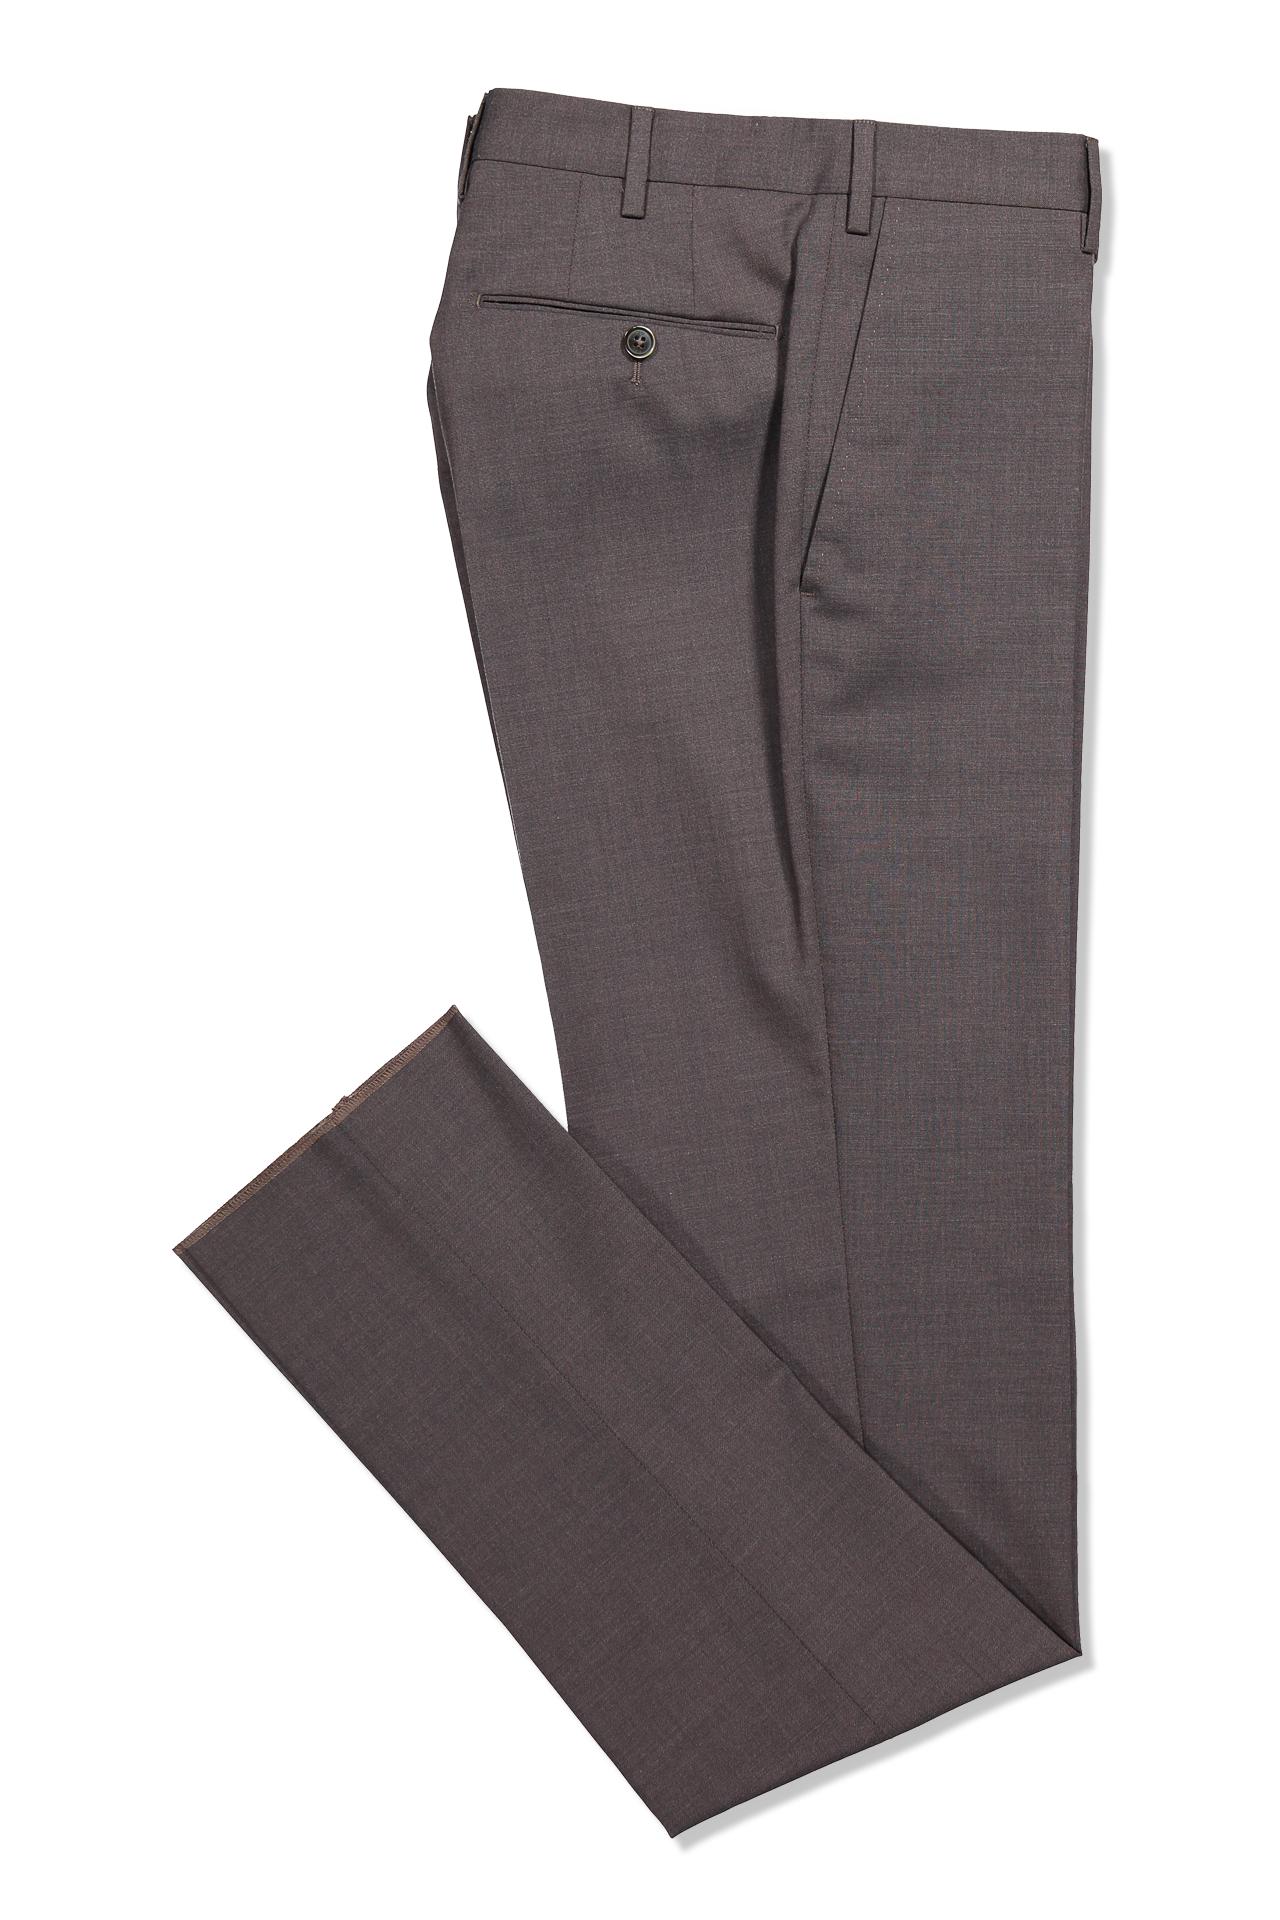 PT Wool Trouser Brown Folded Leg Image (600643469323)